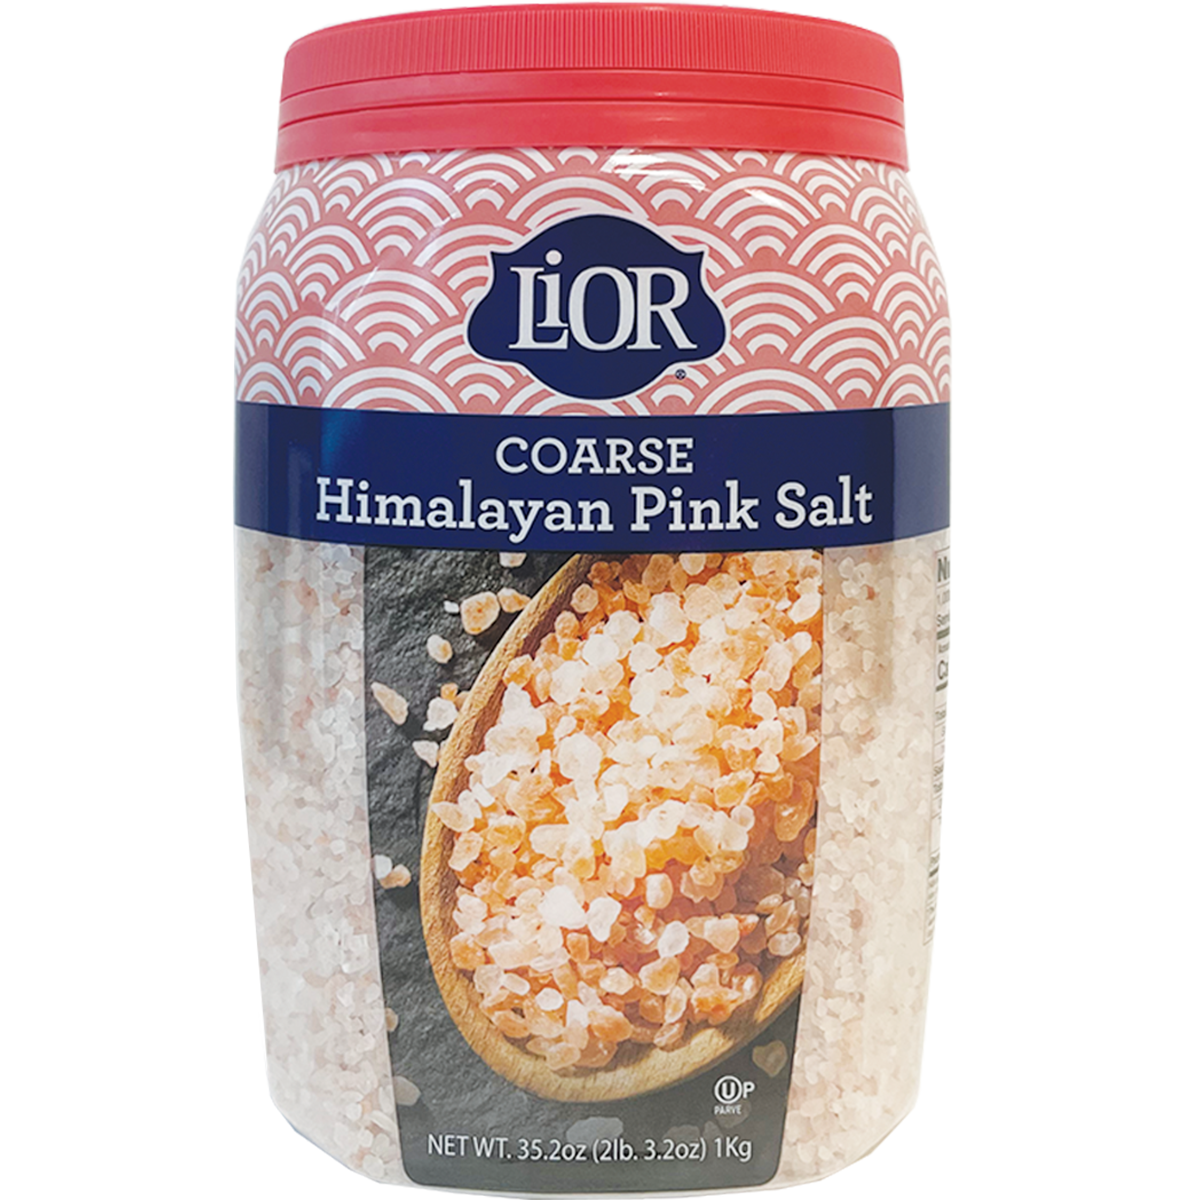 Coarse Himalayan Pink Salt | Chefs Jar | 35.2 oz (2.2 lbs) | LiOR